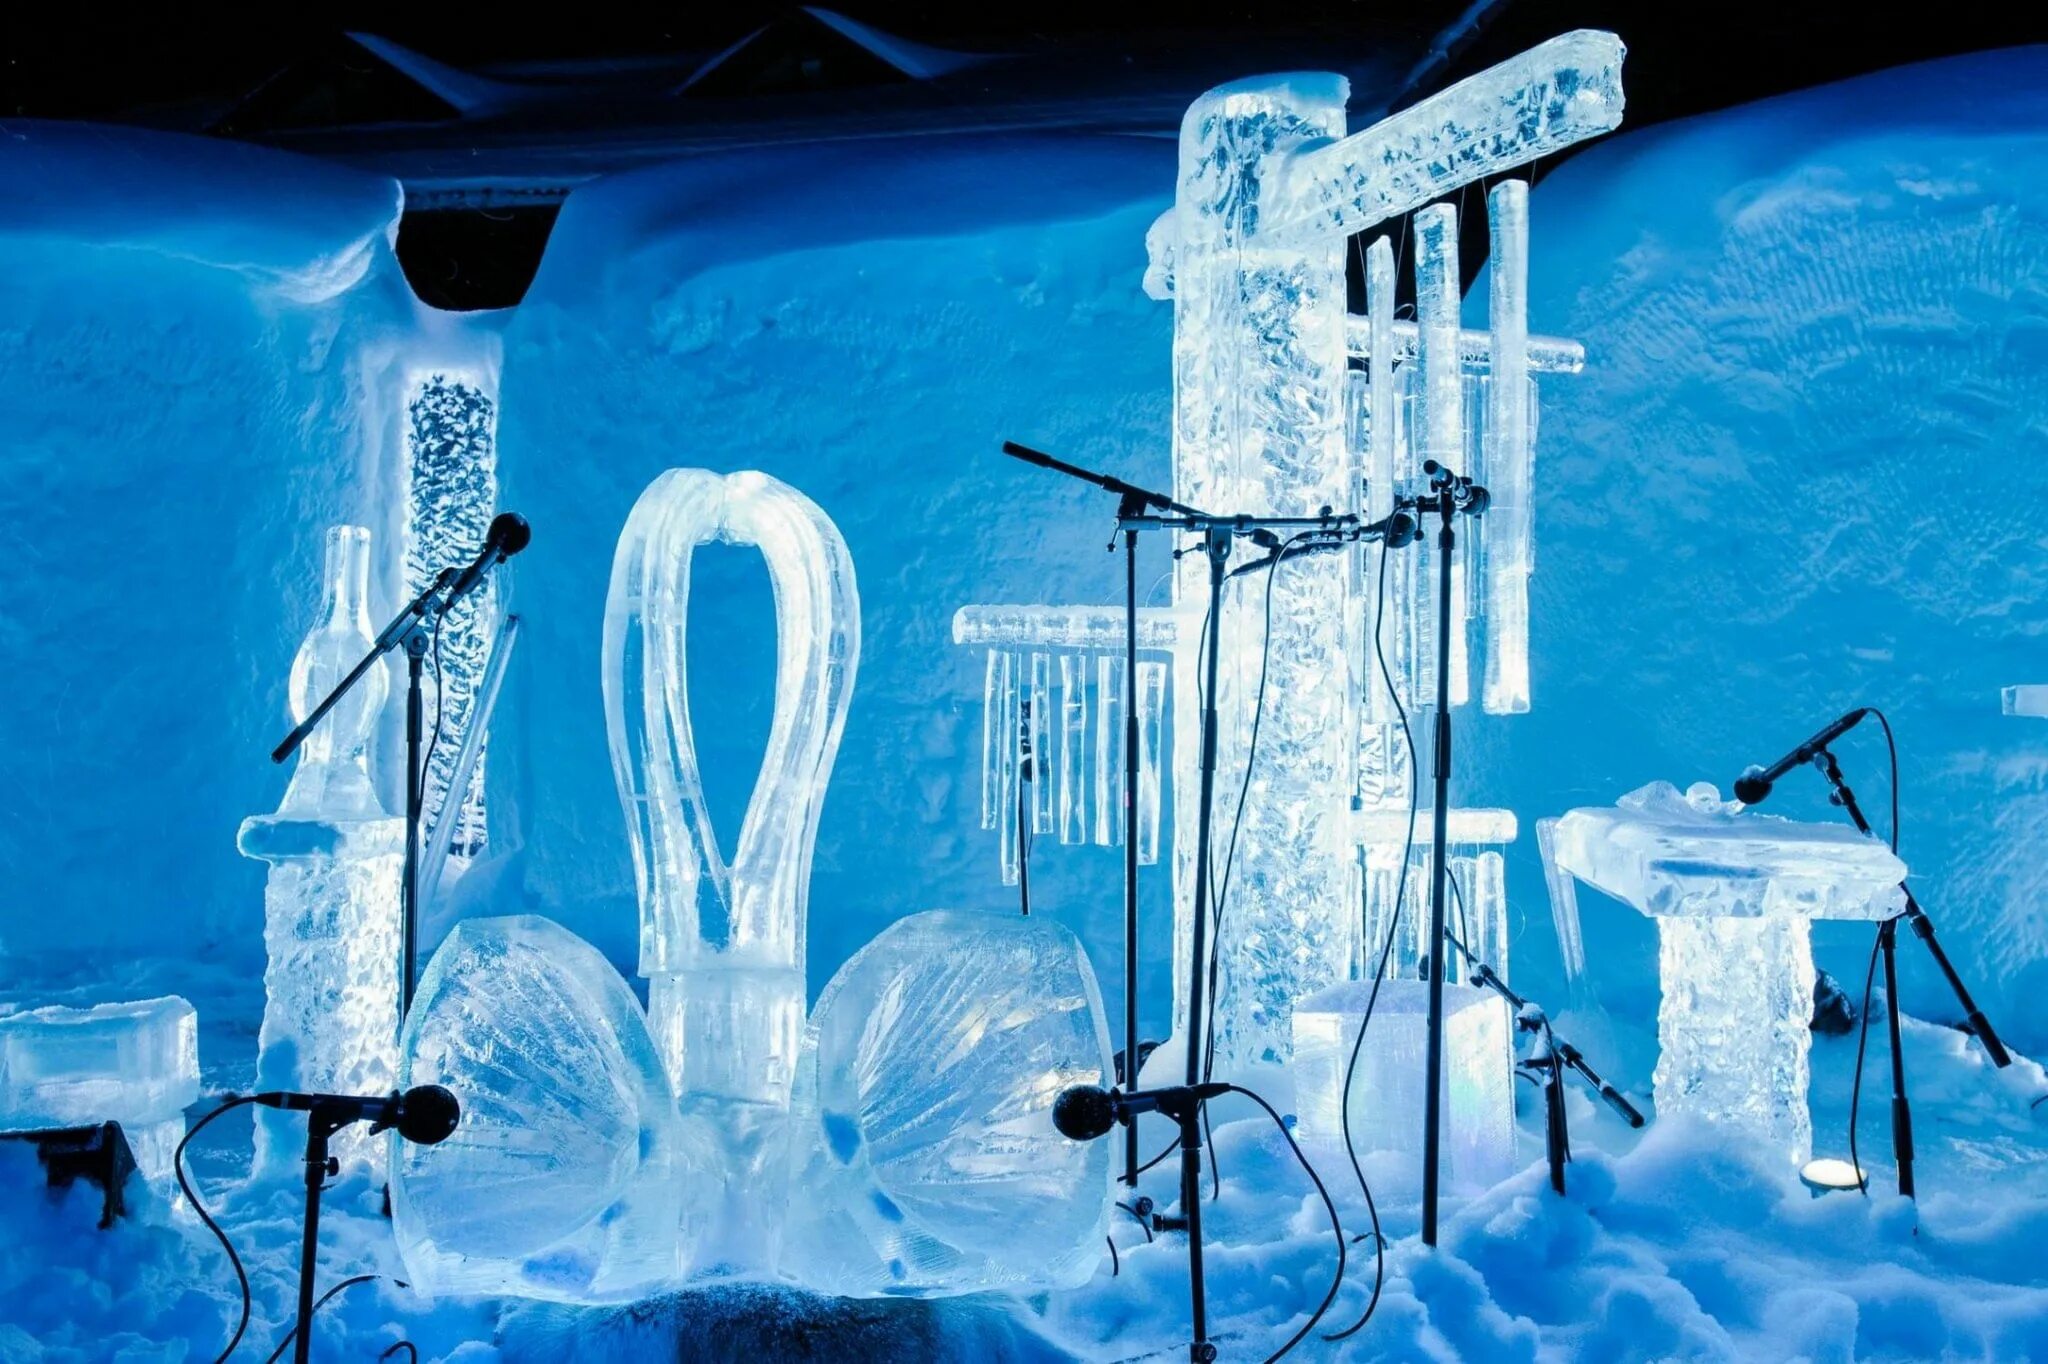 Терье Исунгсет. Terje Isungset. Ледяные музыкальные инструменты. Музыкальные инструменты изо льда. Музыка видео зима